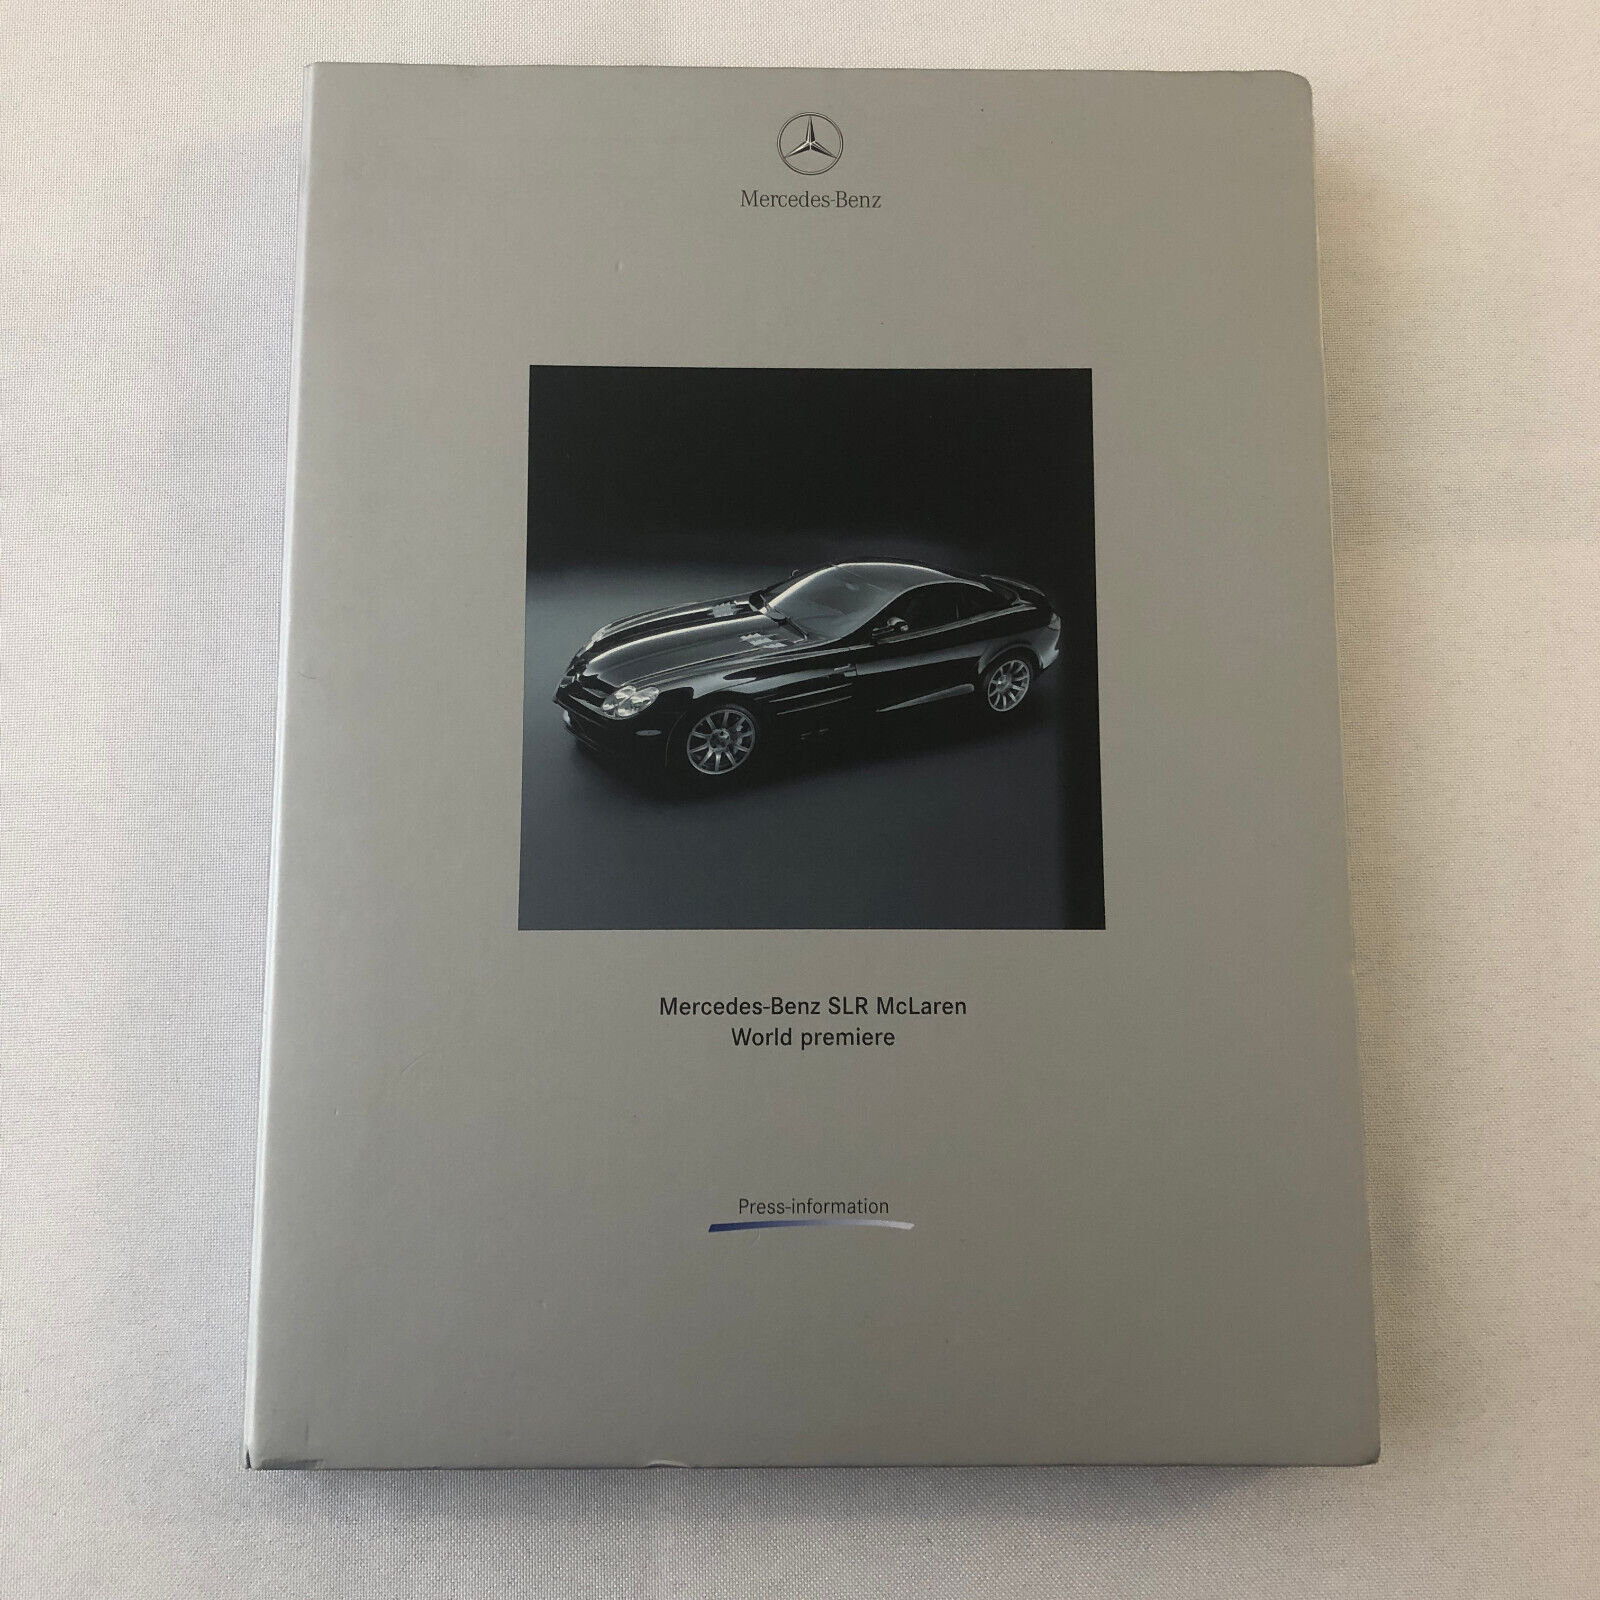 Mercedes Benz SLR McLaren Premiere Press Kit with Photos CD Box Brochure